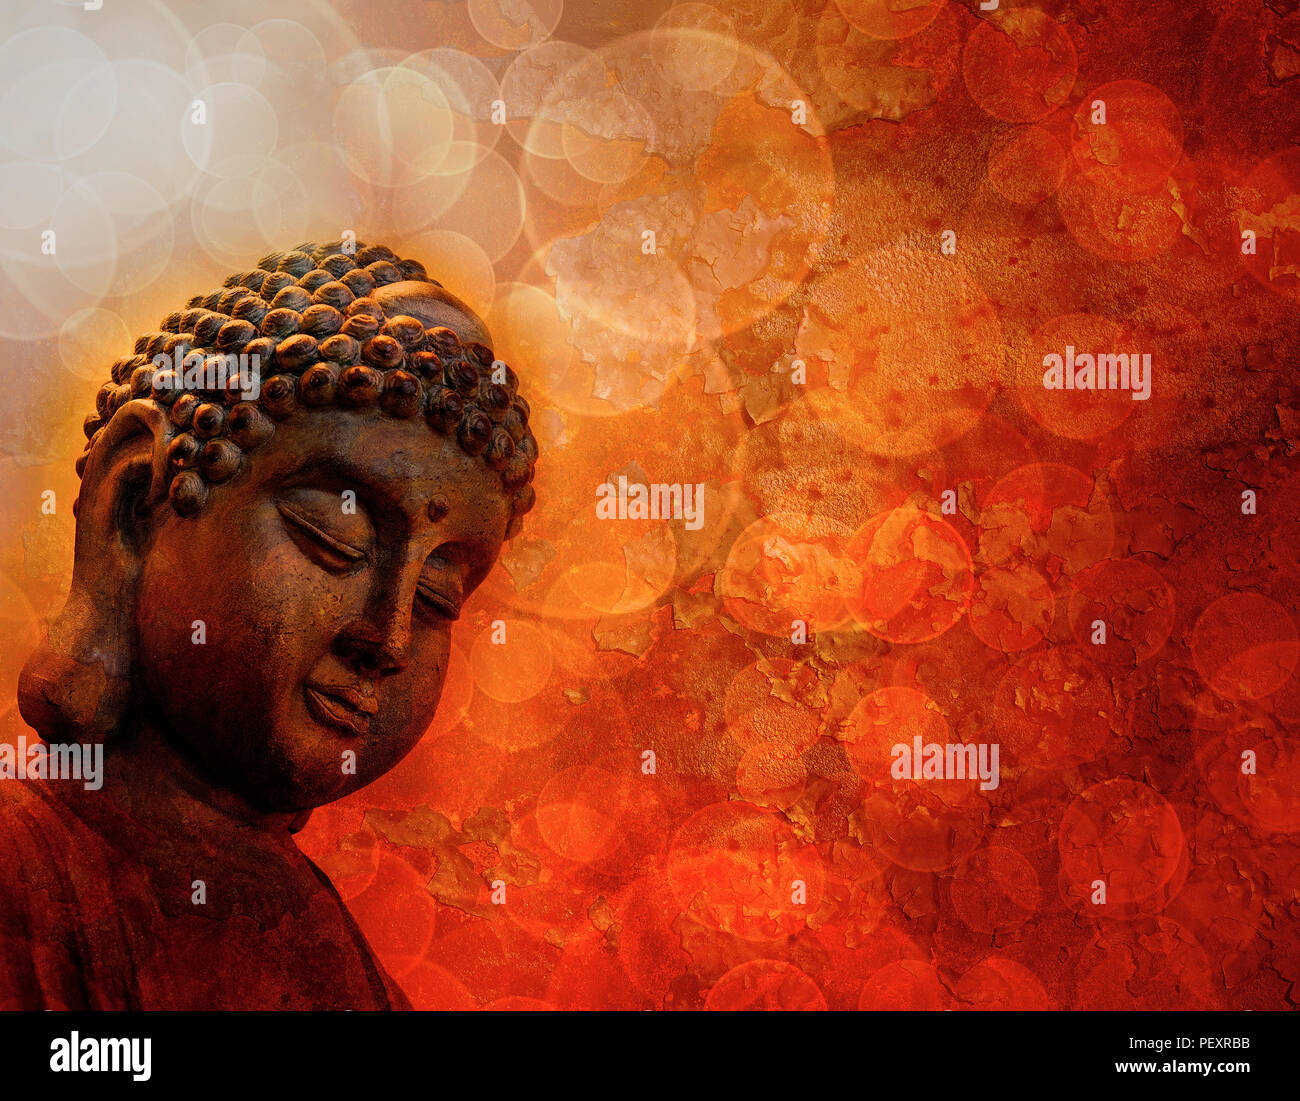 Bronze Zen Buddha Statue Meditating Light Rays Blurred Grunge Textured Red Background Stock Photo